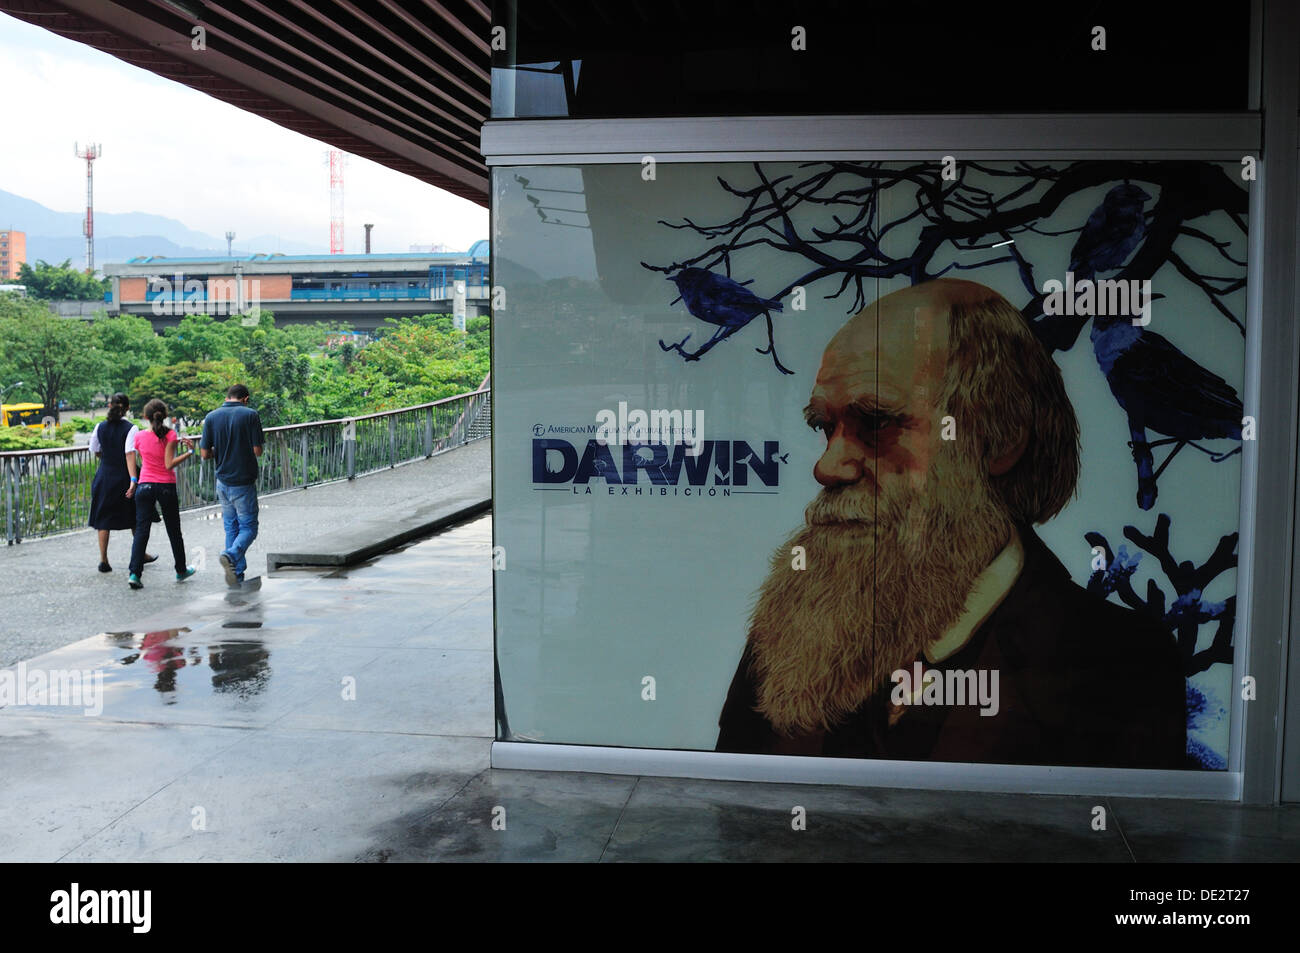 Darwin exhibition- Parque Explora in MEDELLIN .Department of Antioquia. COLOMBIA Stock Photo